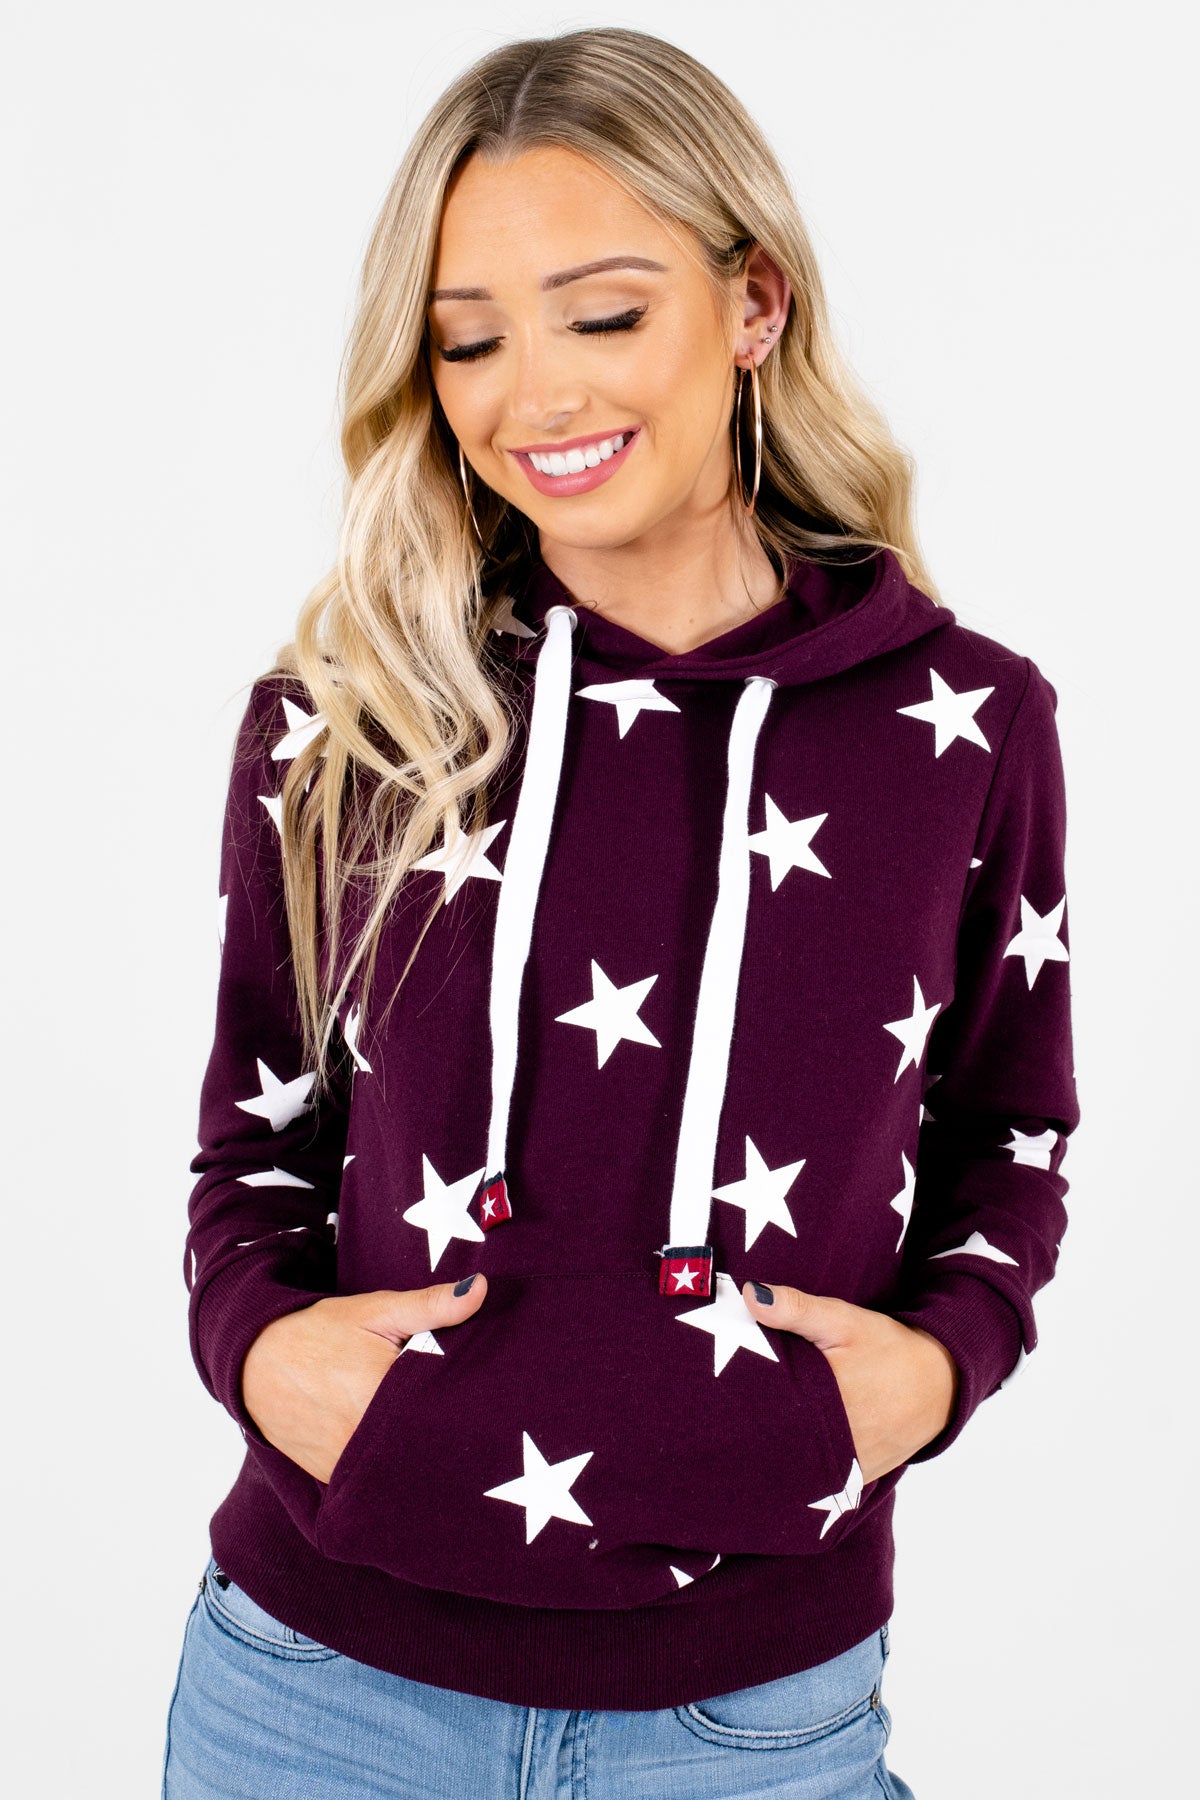 Women’s Purple Warm and Cozy Boutique Hoodies